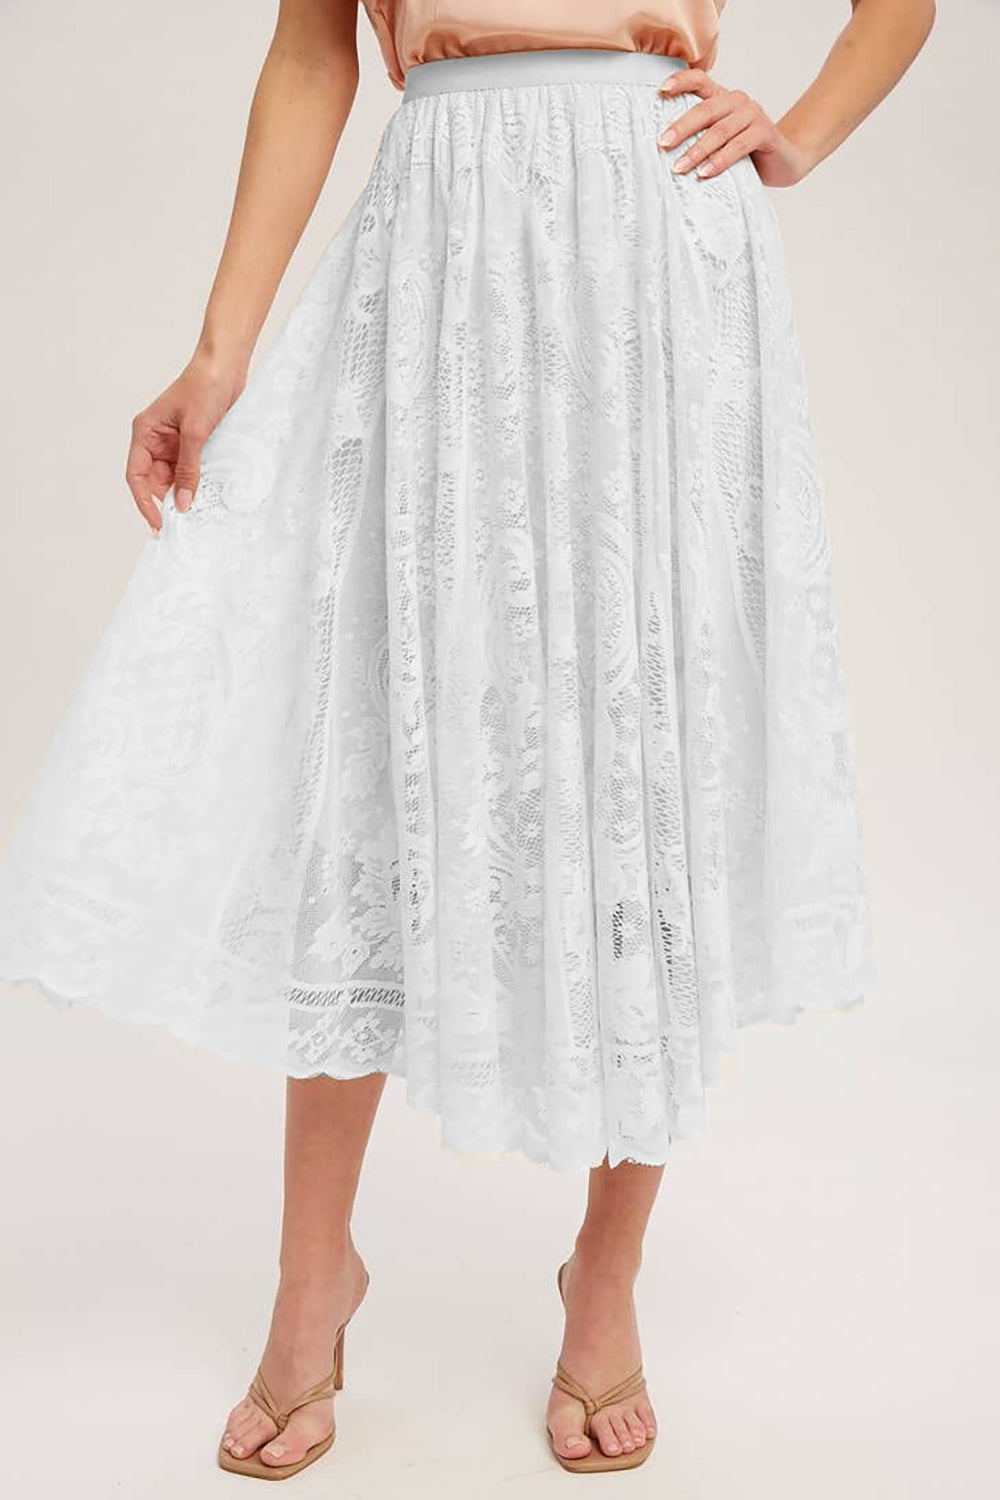 Lace High Waist Midi Skirt White S 